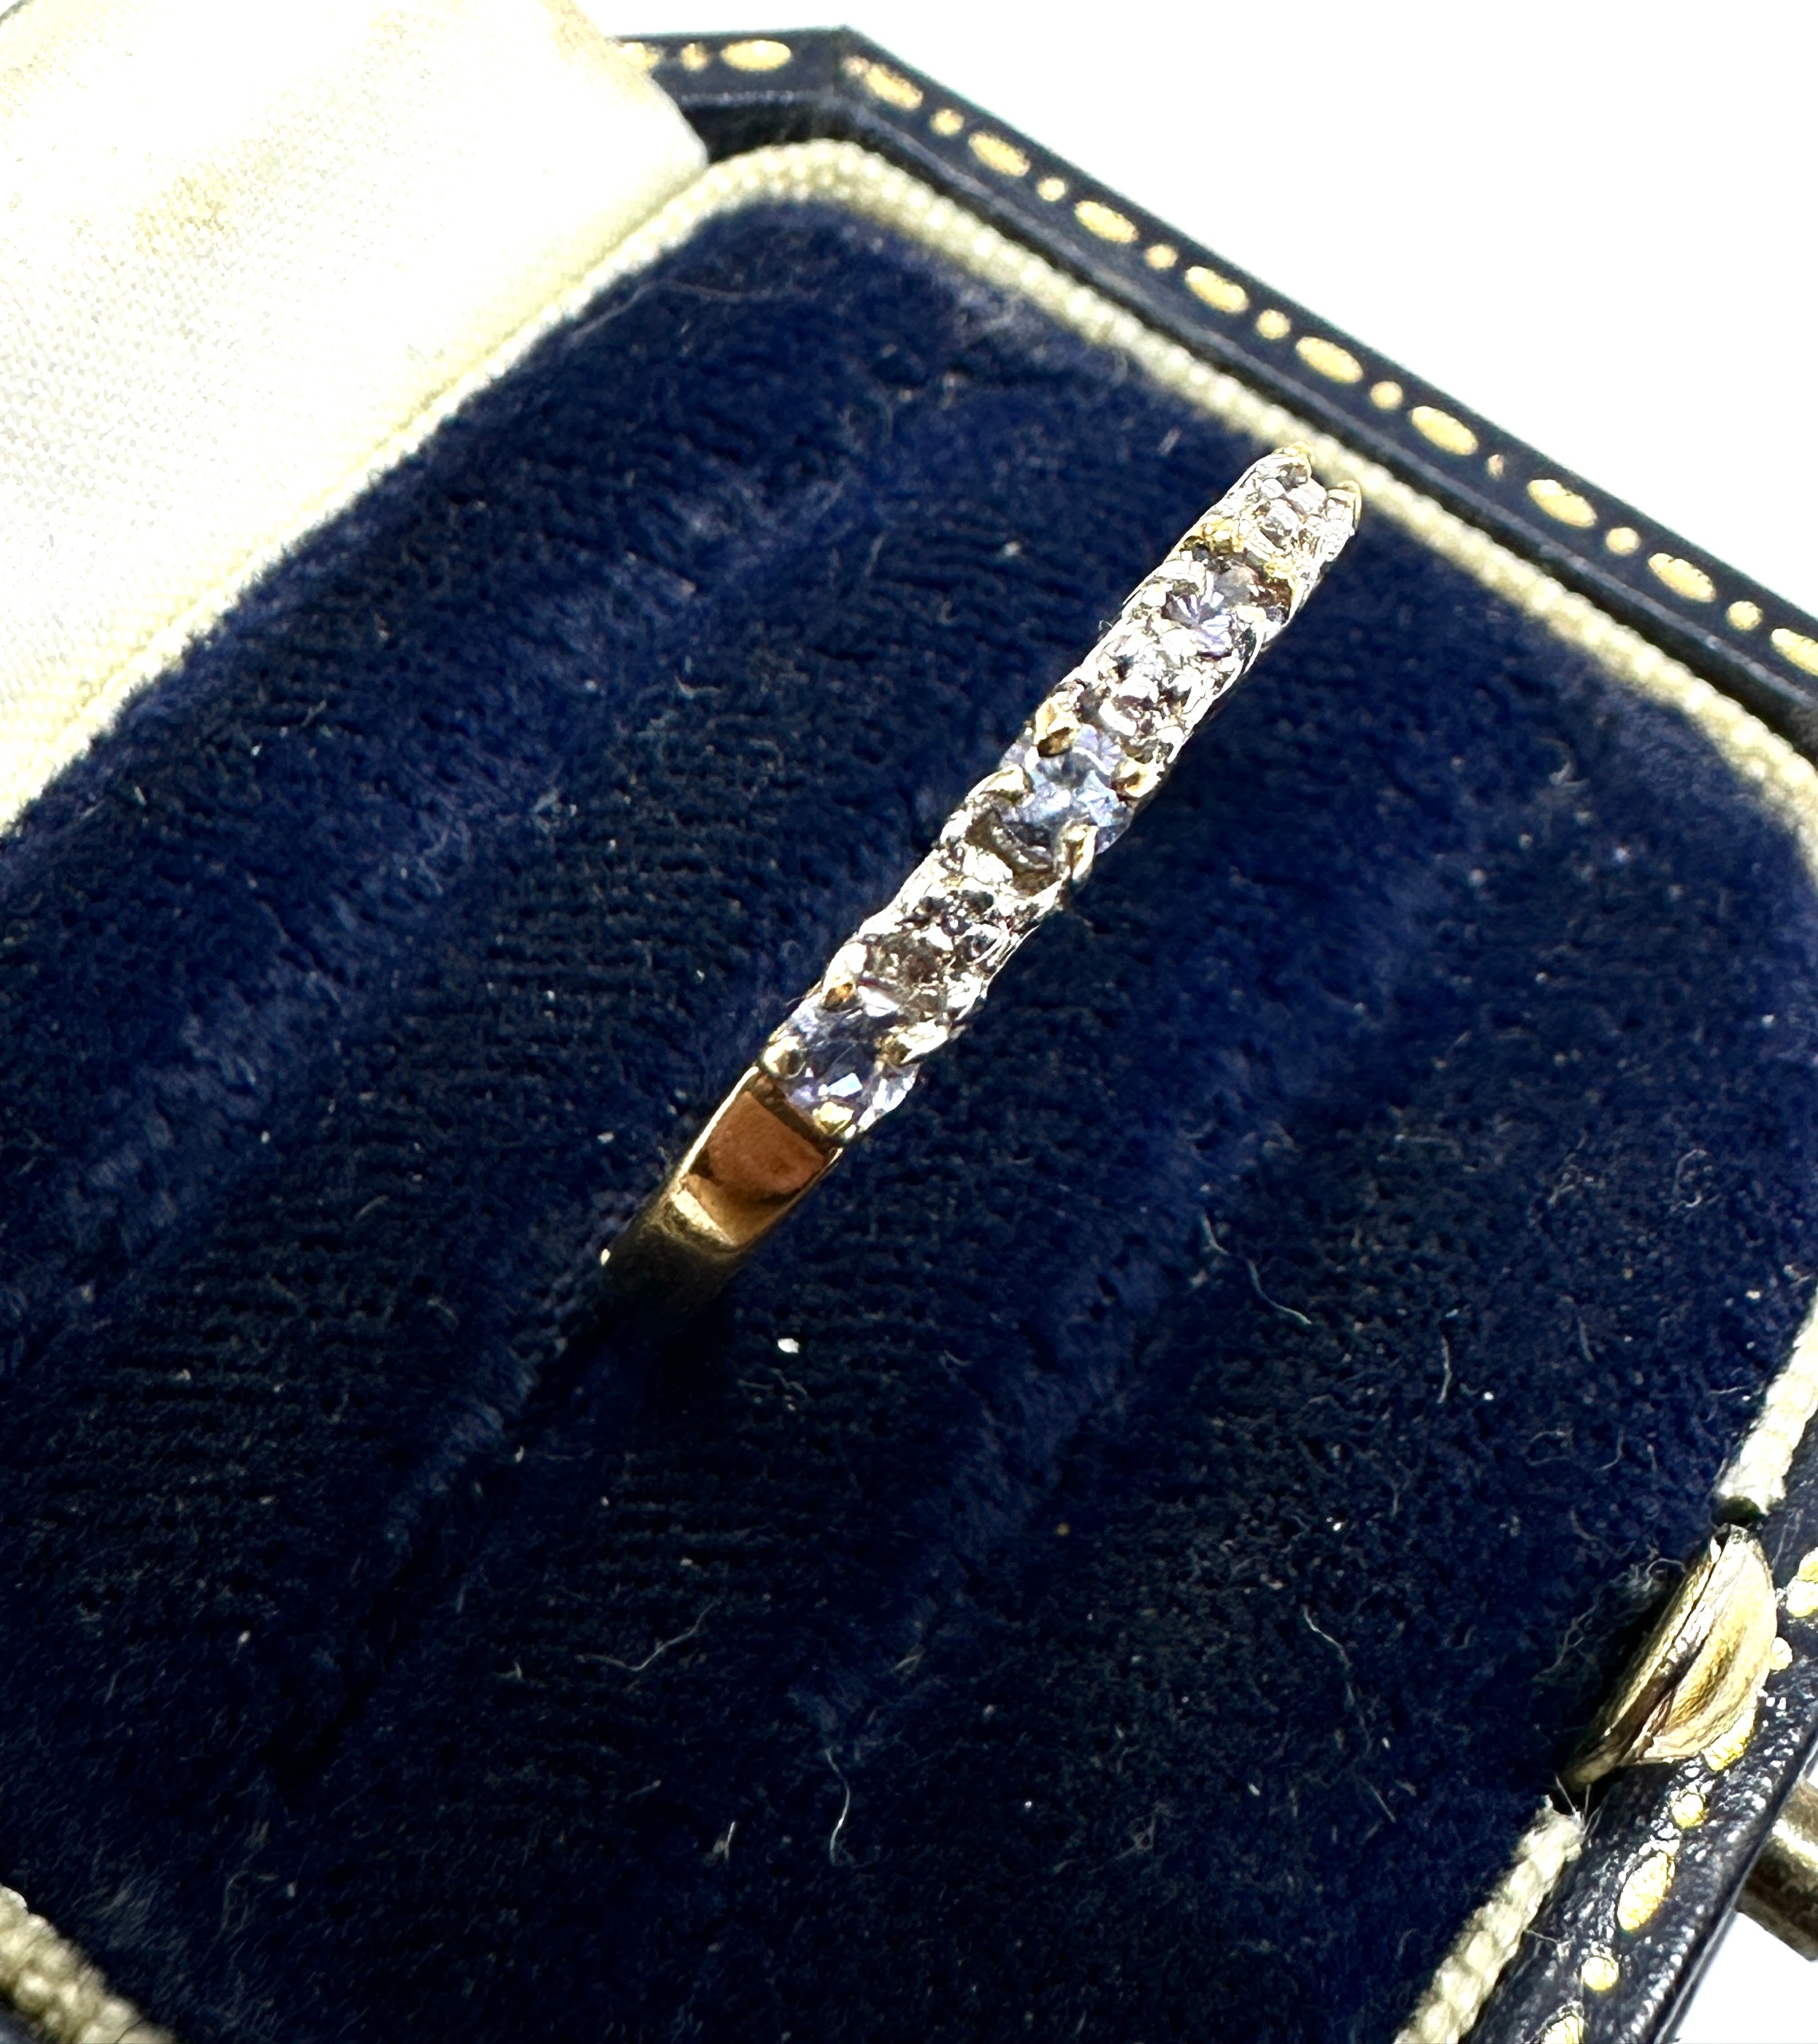 9ct gold tanzanite & diamond ring weight 1.5g - Image 2 of 4